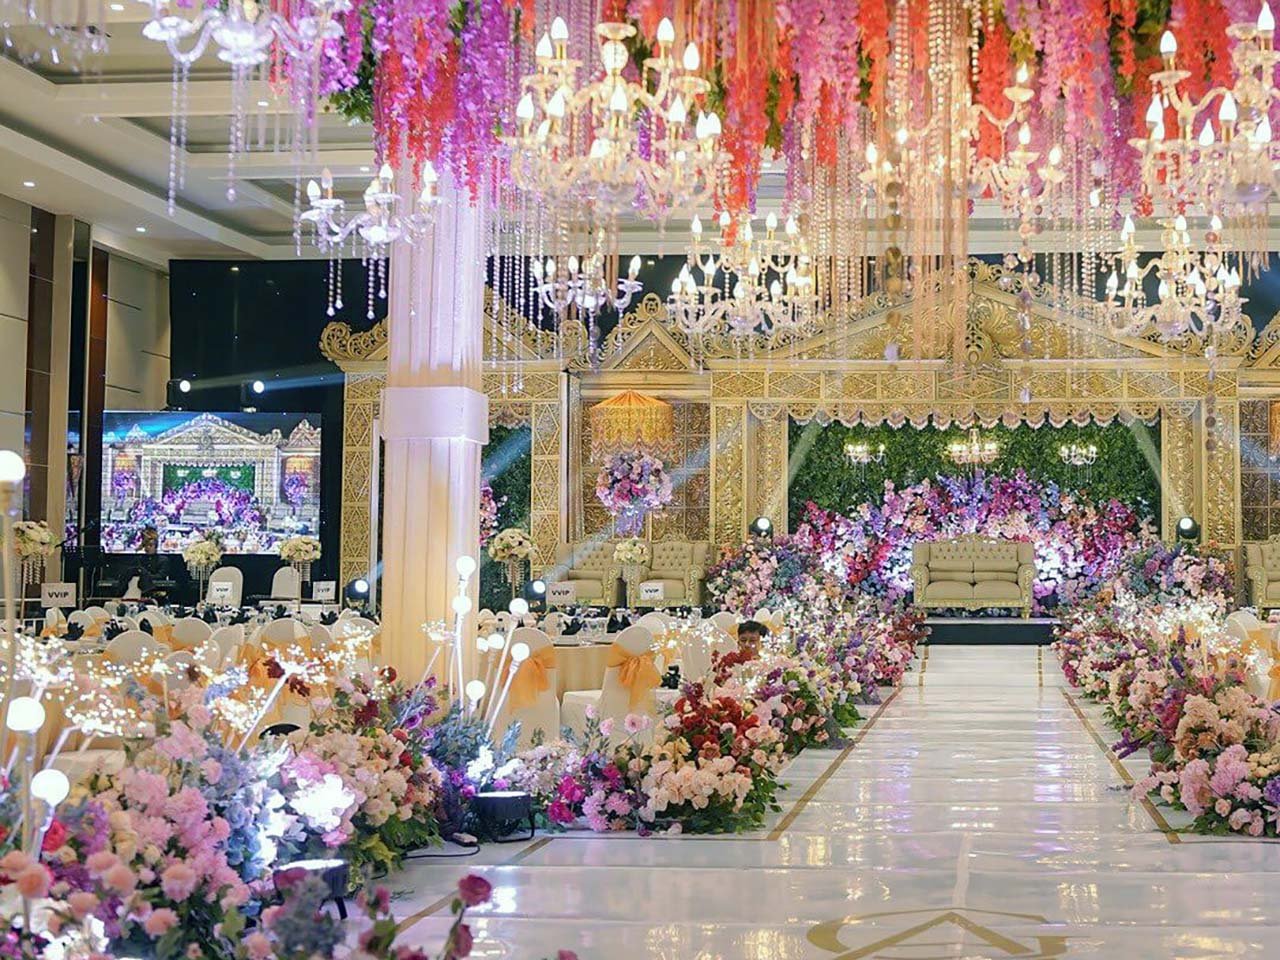 TUTURA.ID - Peran wedding organizer mewujudkan momen indah tak terlupakan